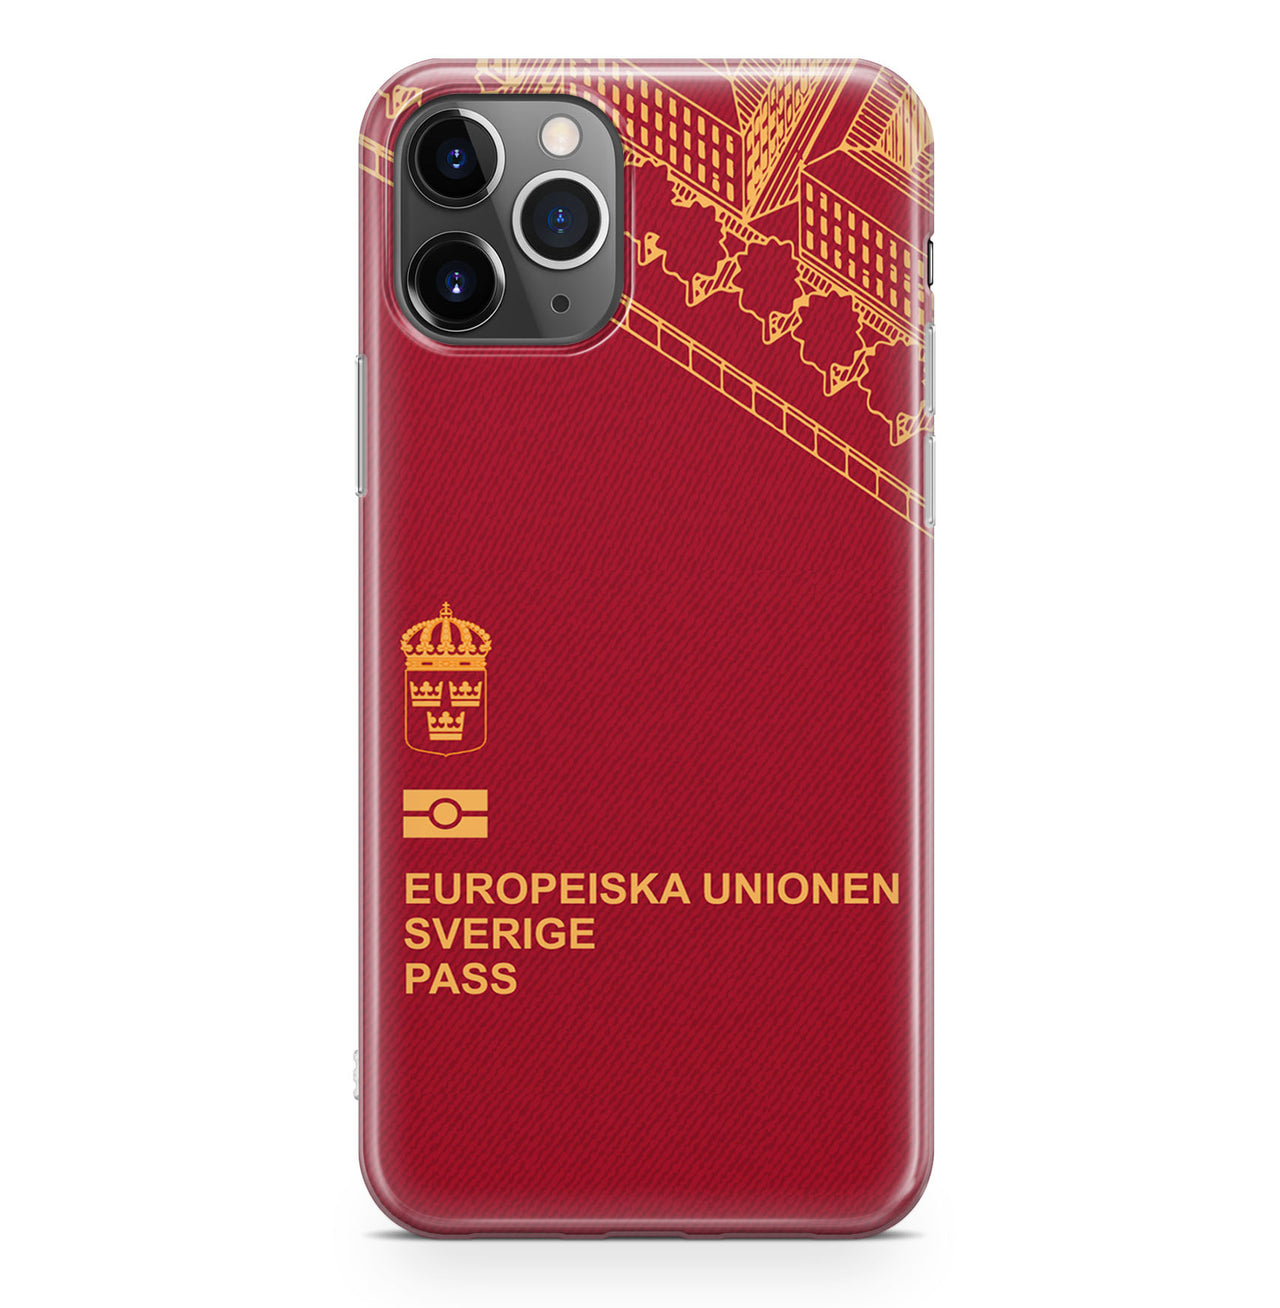 Sweden Passport Designed iPhone Cases